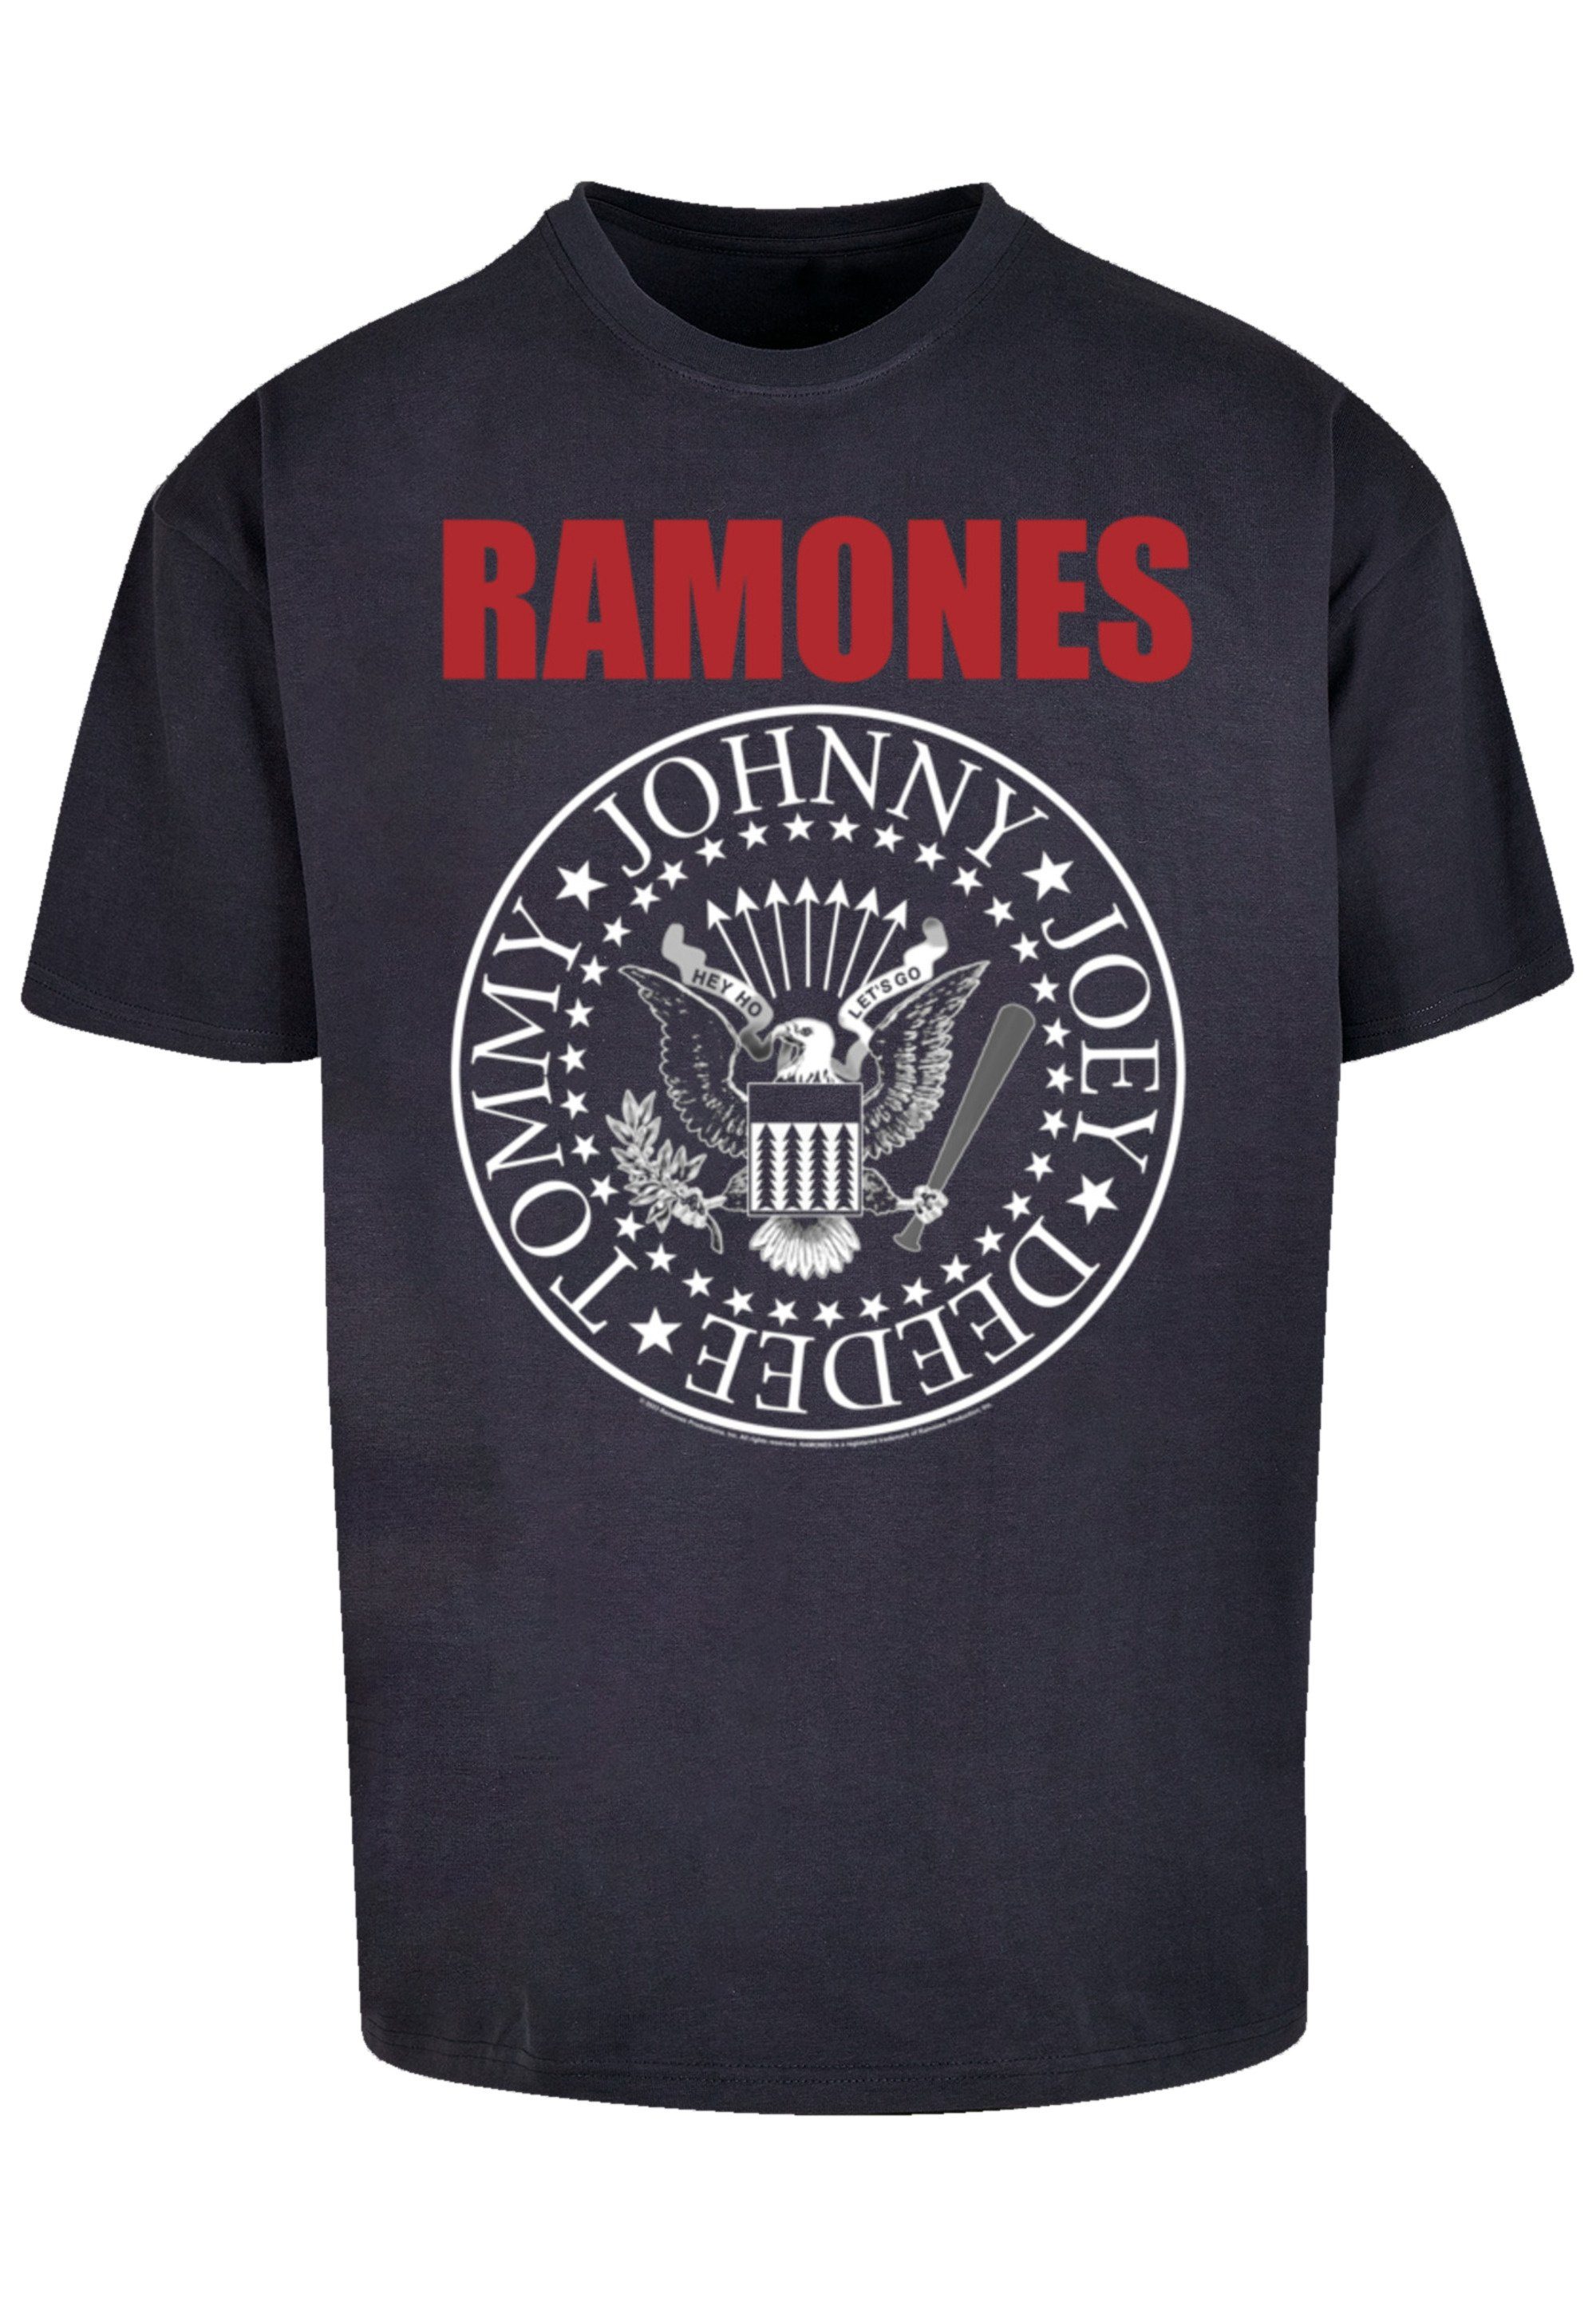 T-Shirt Red Premium Band, Qualität, Ramones Text Band F4NT4STIC Seal Musik navy Rock Rock-Musik